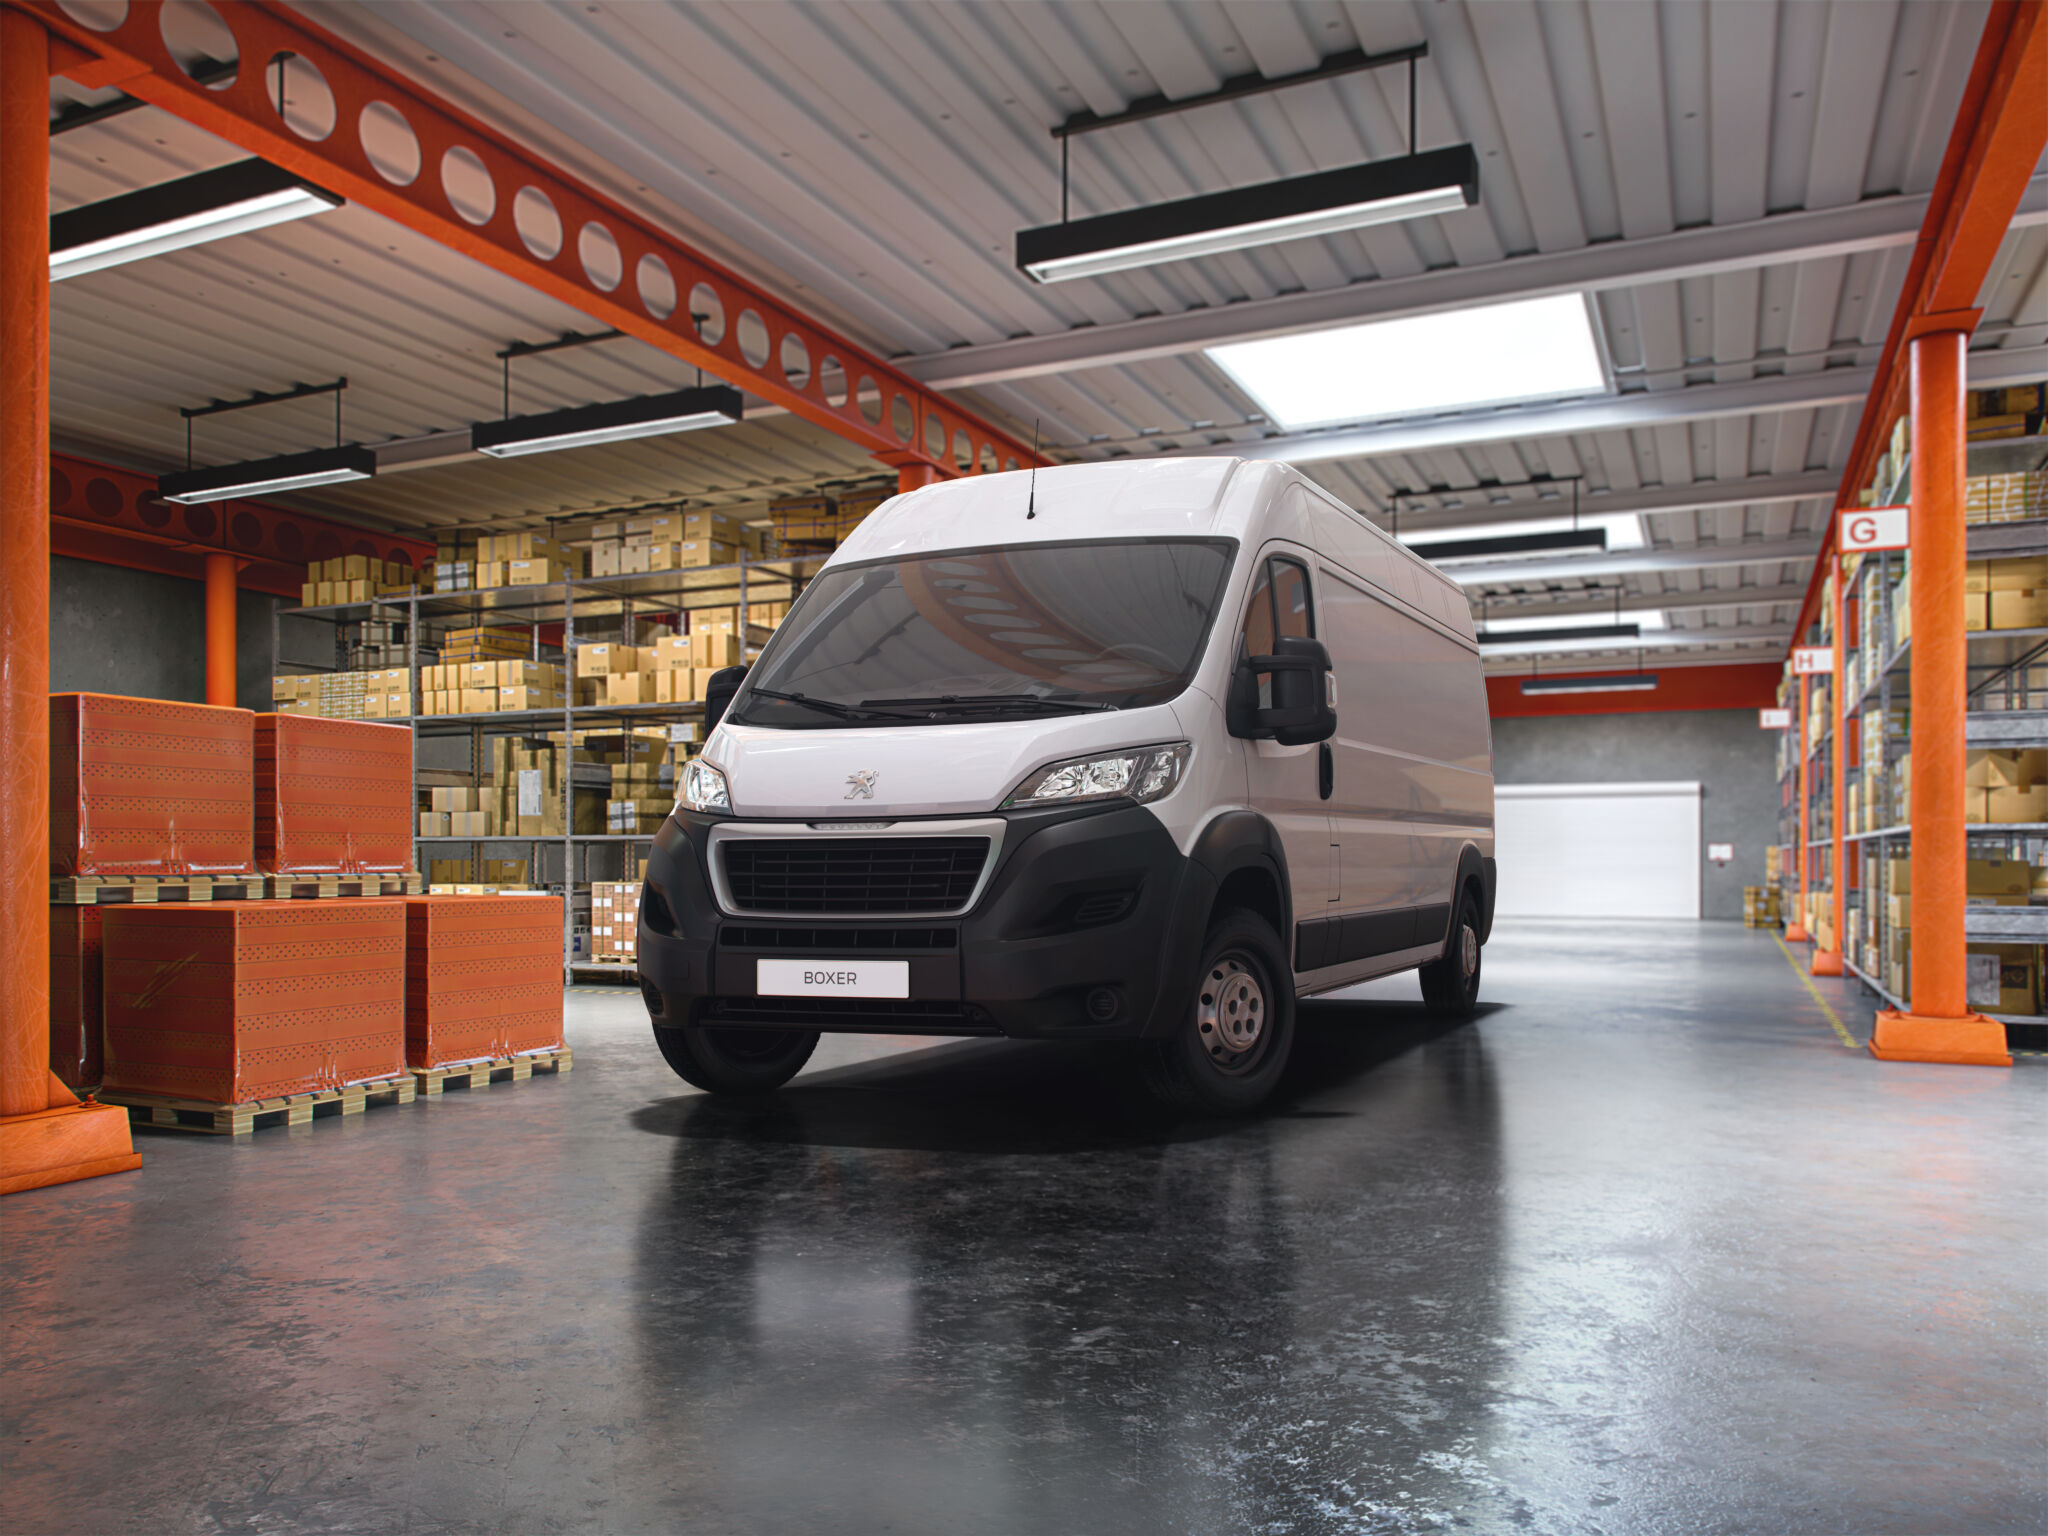 Nova Peugeot Boxer Cargo branca em ambiente industrial